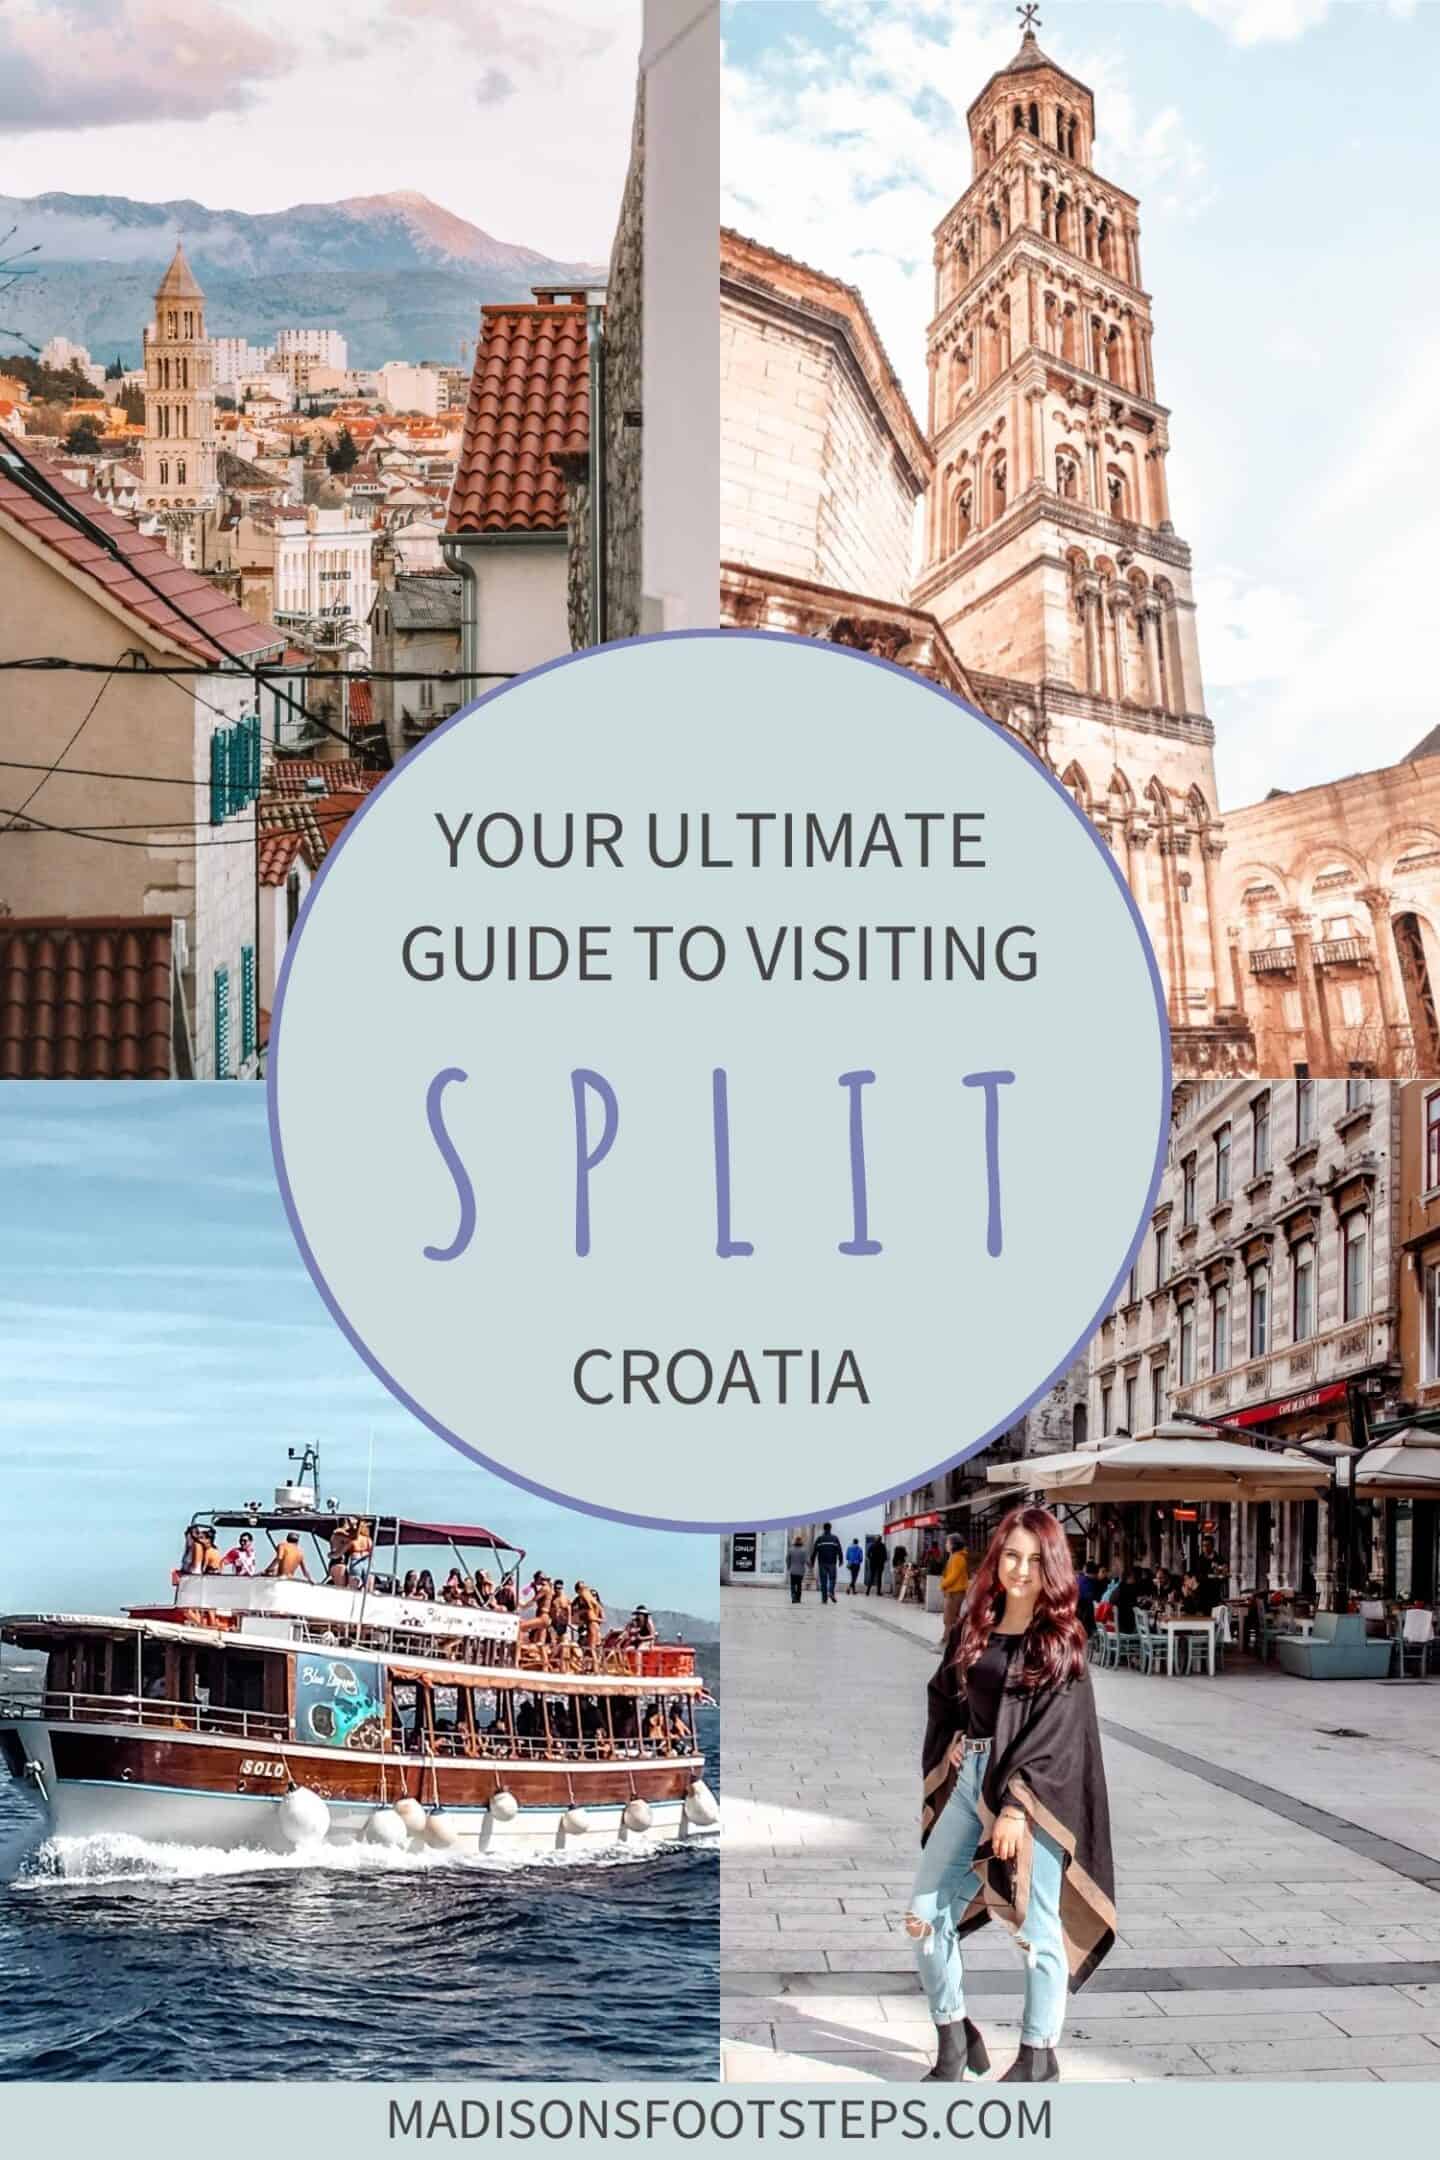 Split (Croacia), www.tierrasinsolitas.com, Erik